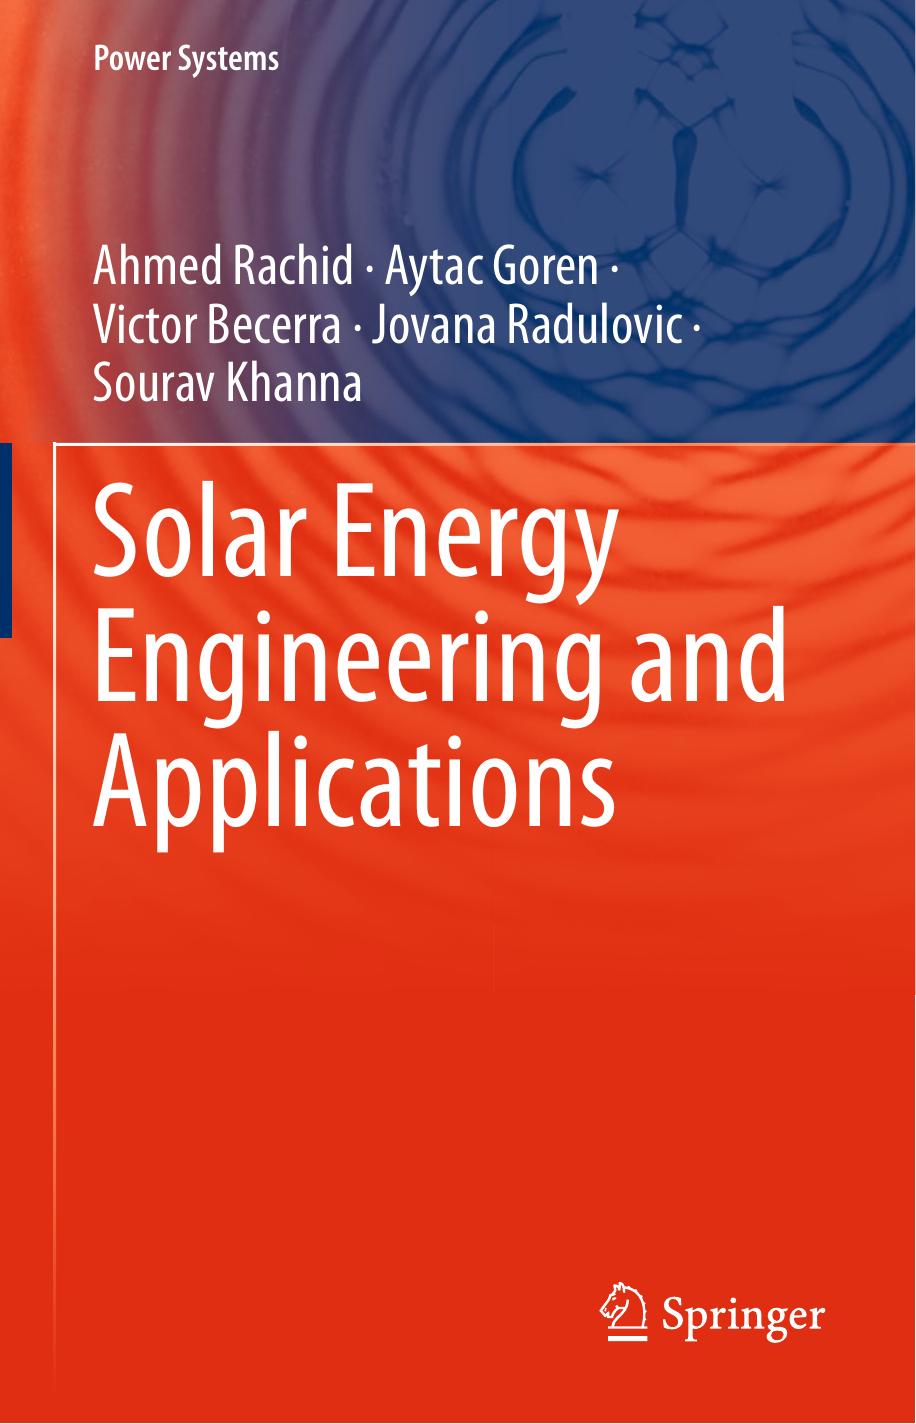 Solar Energy Engineering and Applications by Ahmed Rachid Aytac Goren Victor Becerra Jovana Radulovic Sourav Khanna